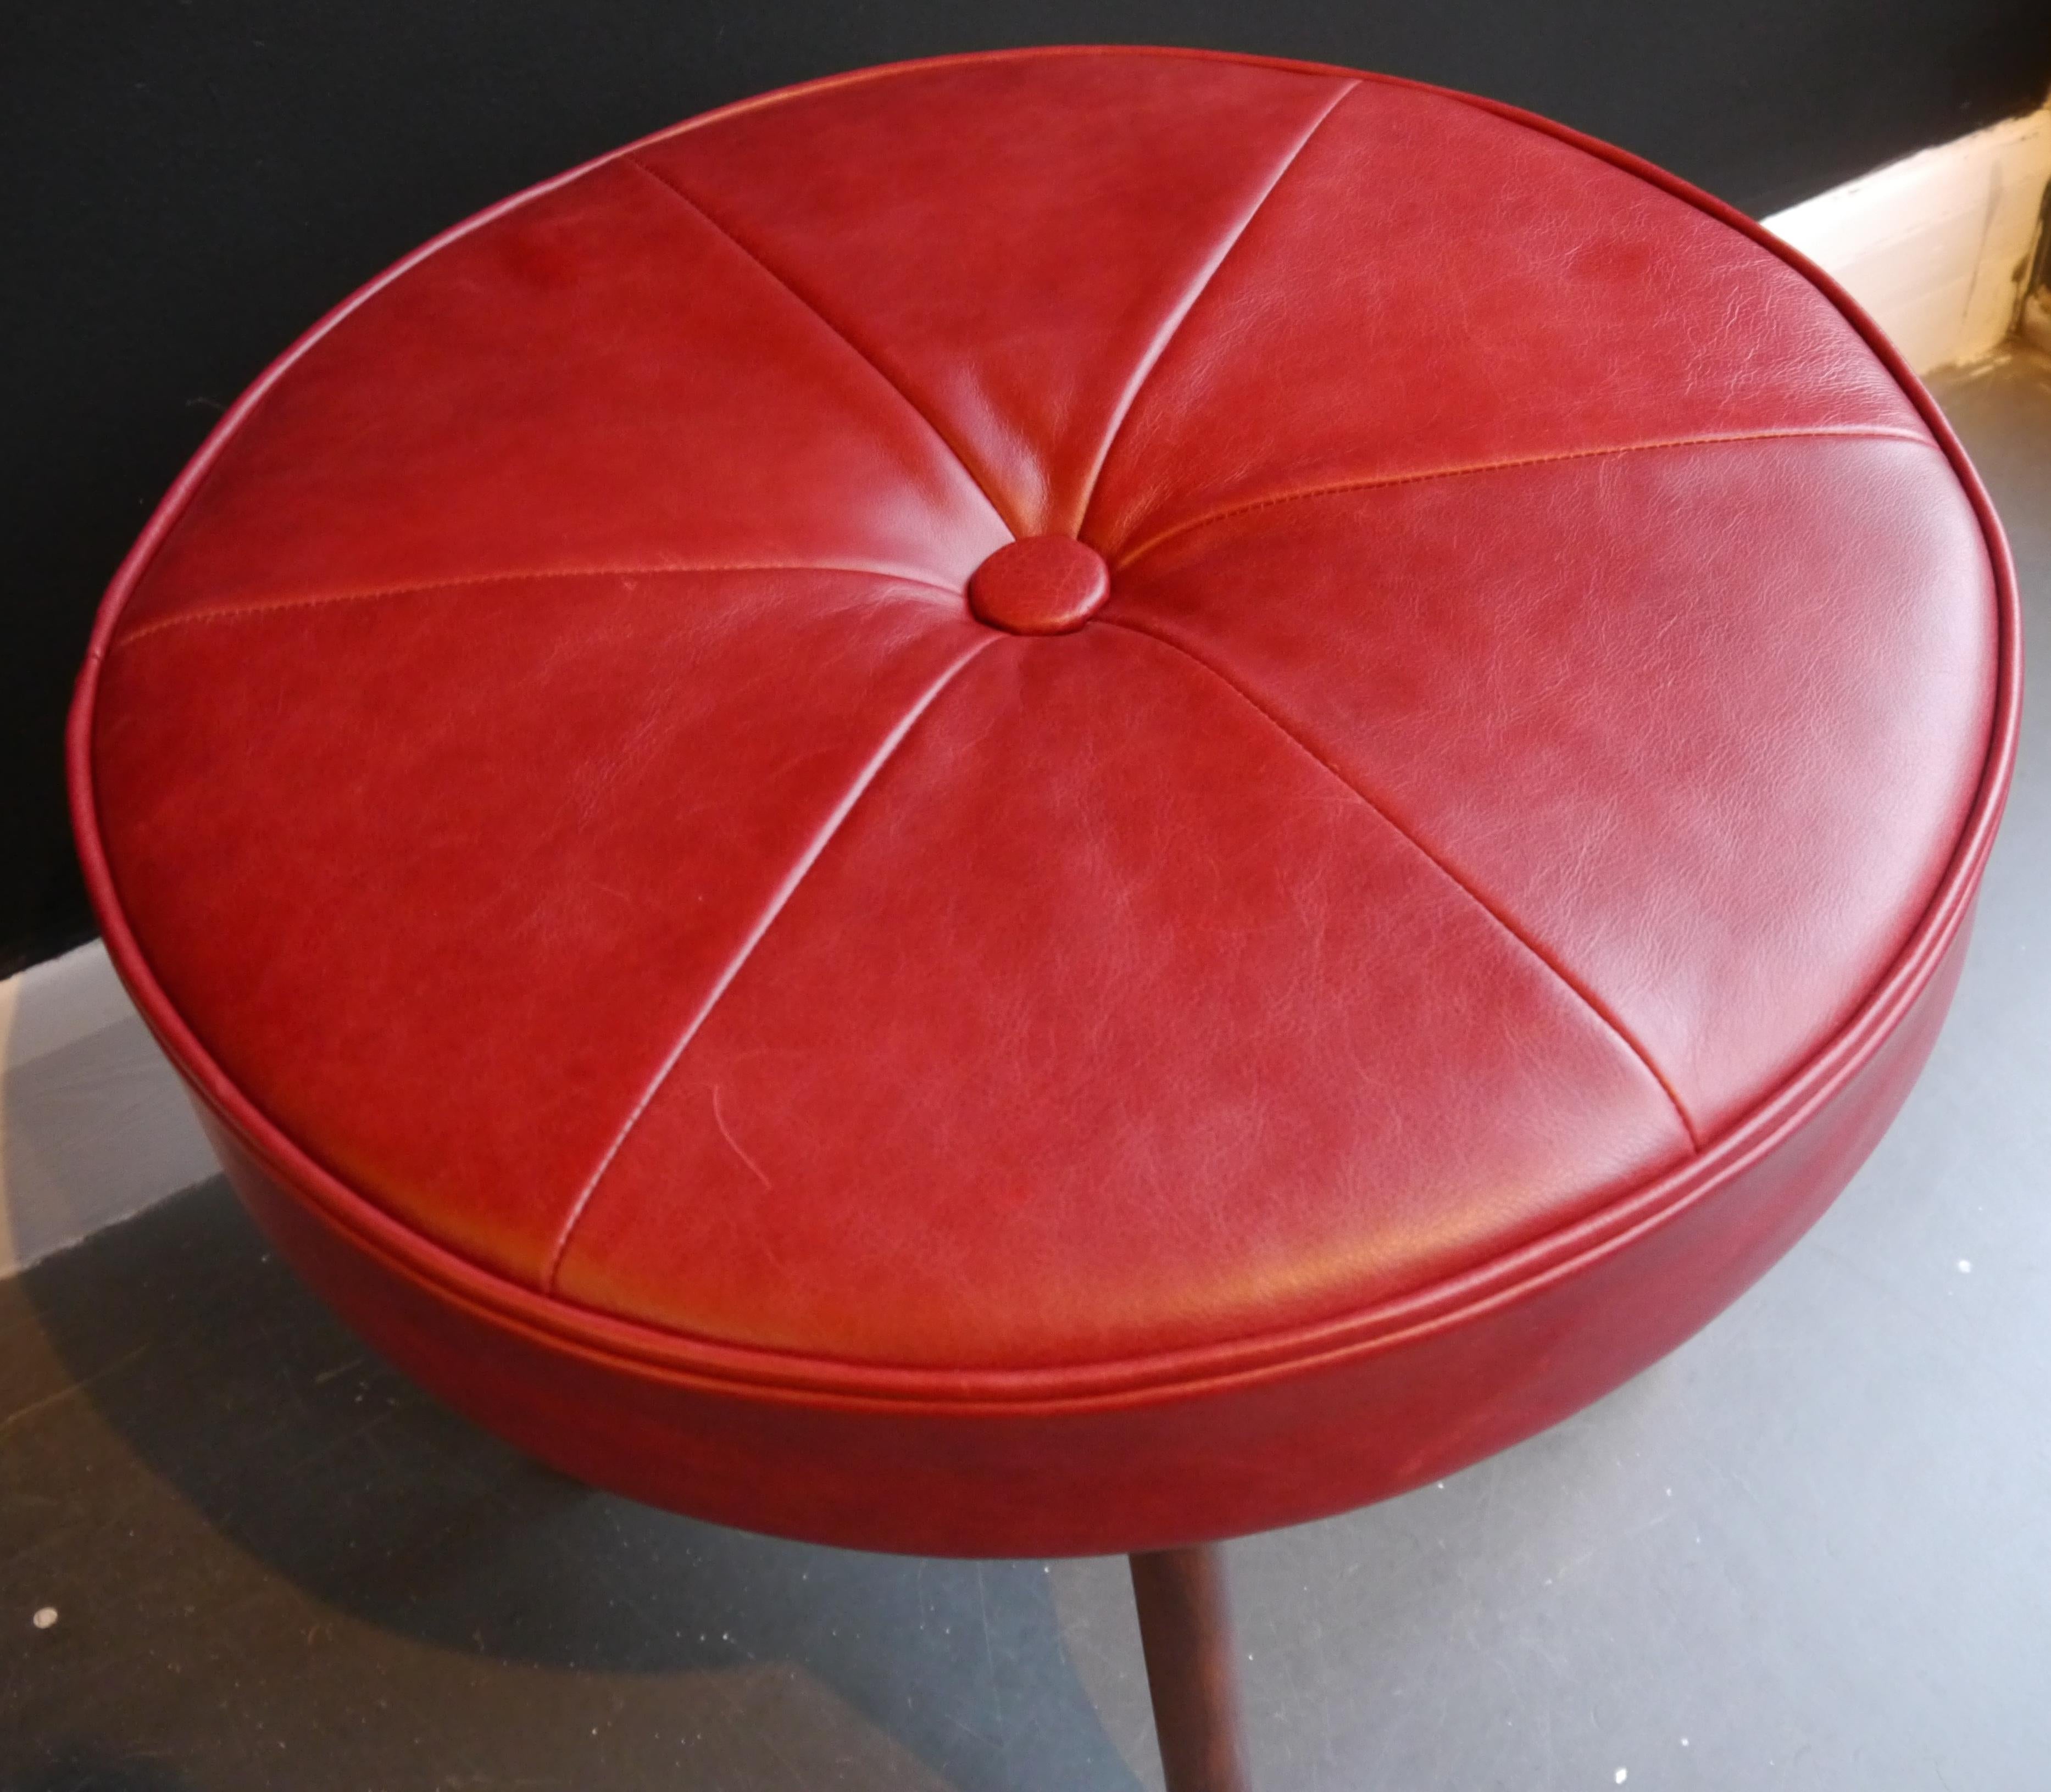 1970s English G-plan Teak based leather/cloth footstool designed by Kofod larsen For Sale 5